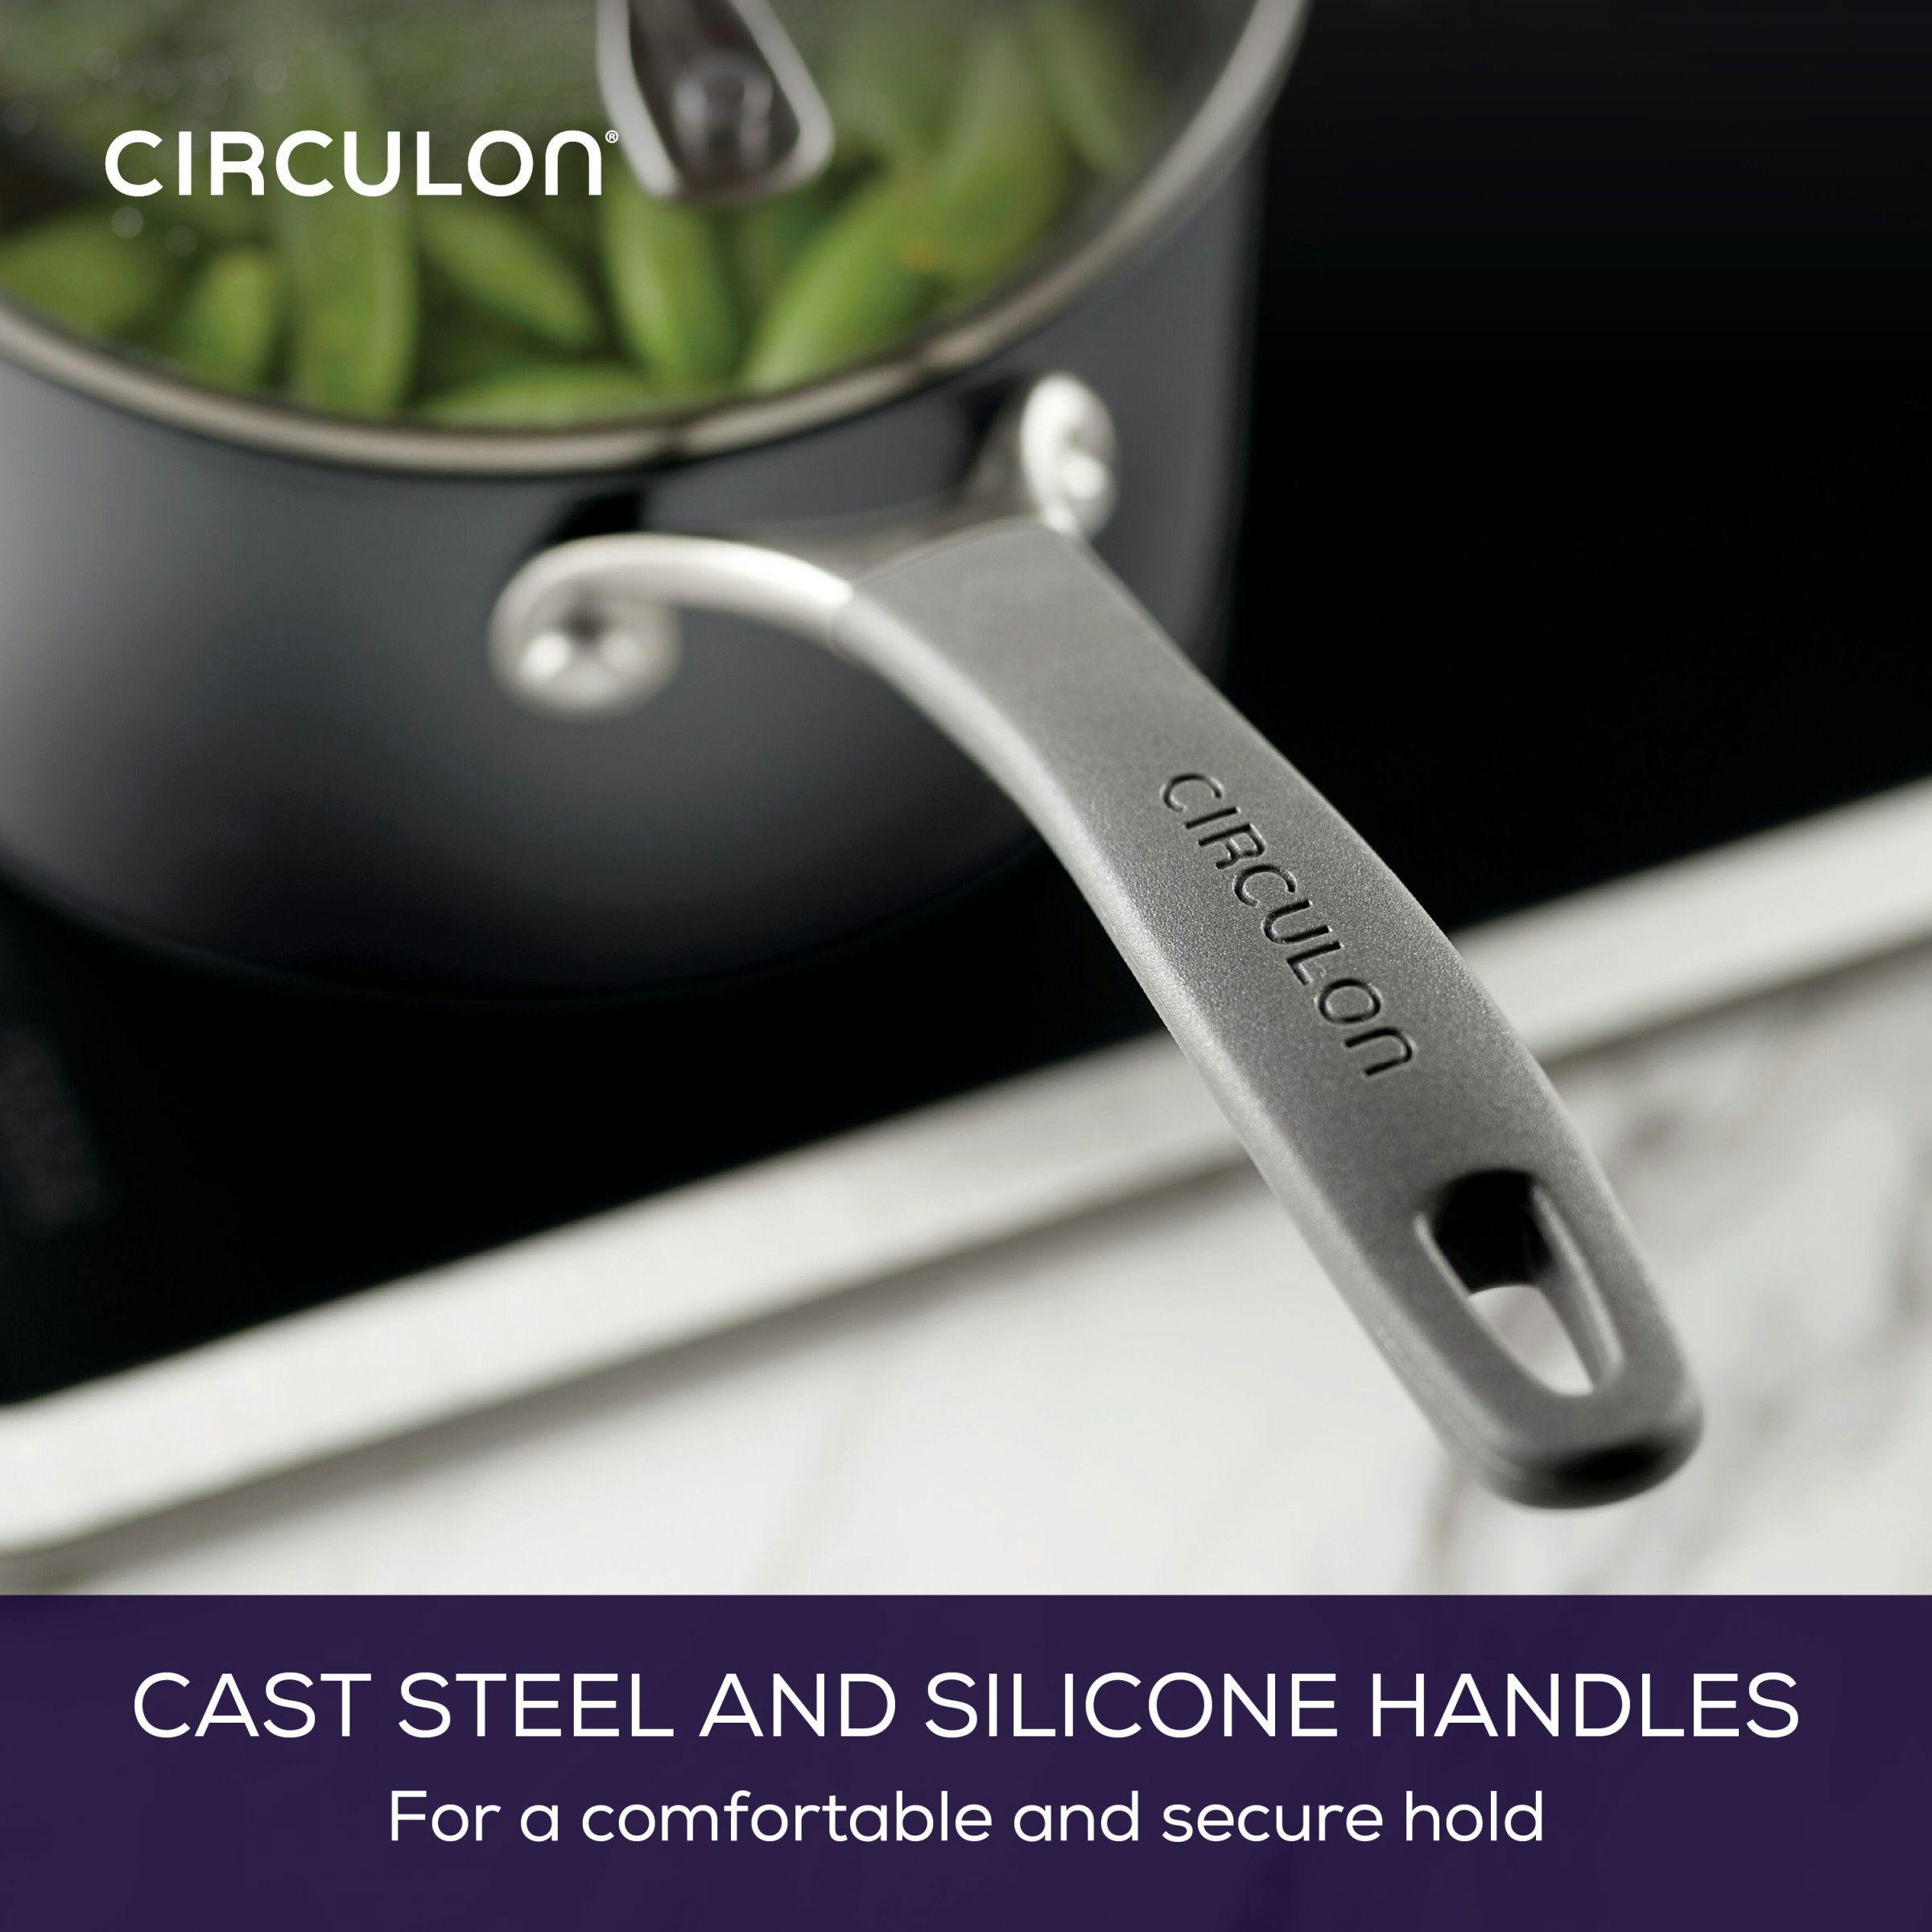 Circulon 5-Quart ScratchDefense A1 Series Nonstick Saute Pan with Lid, Graphite